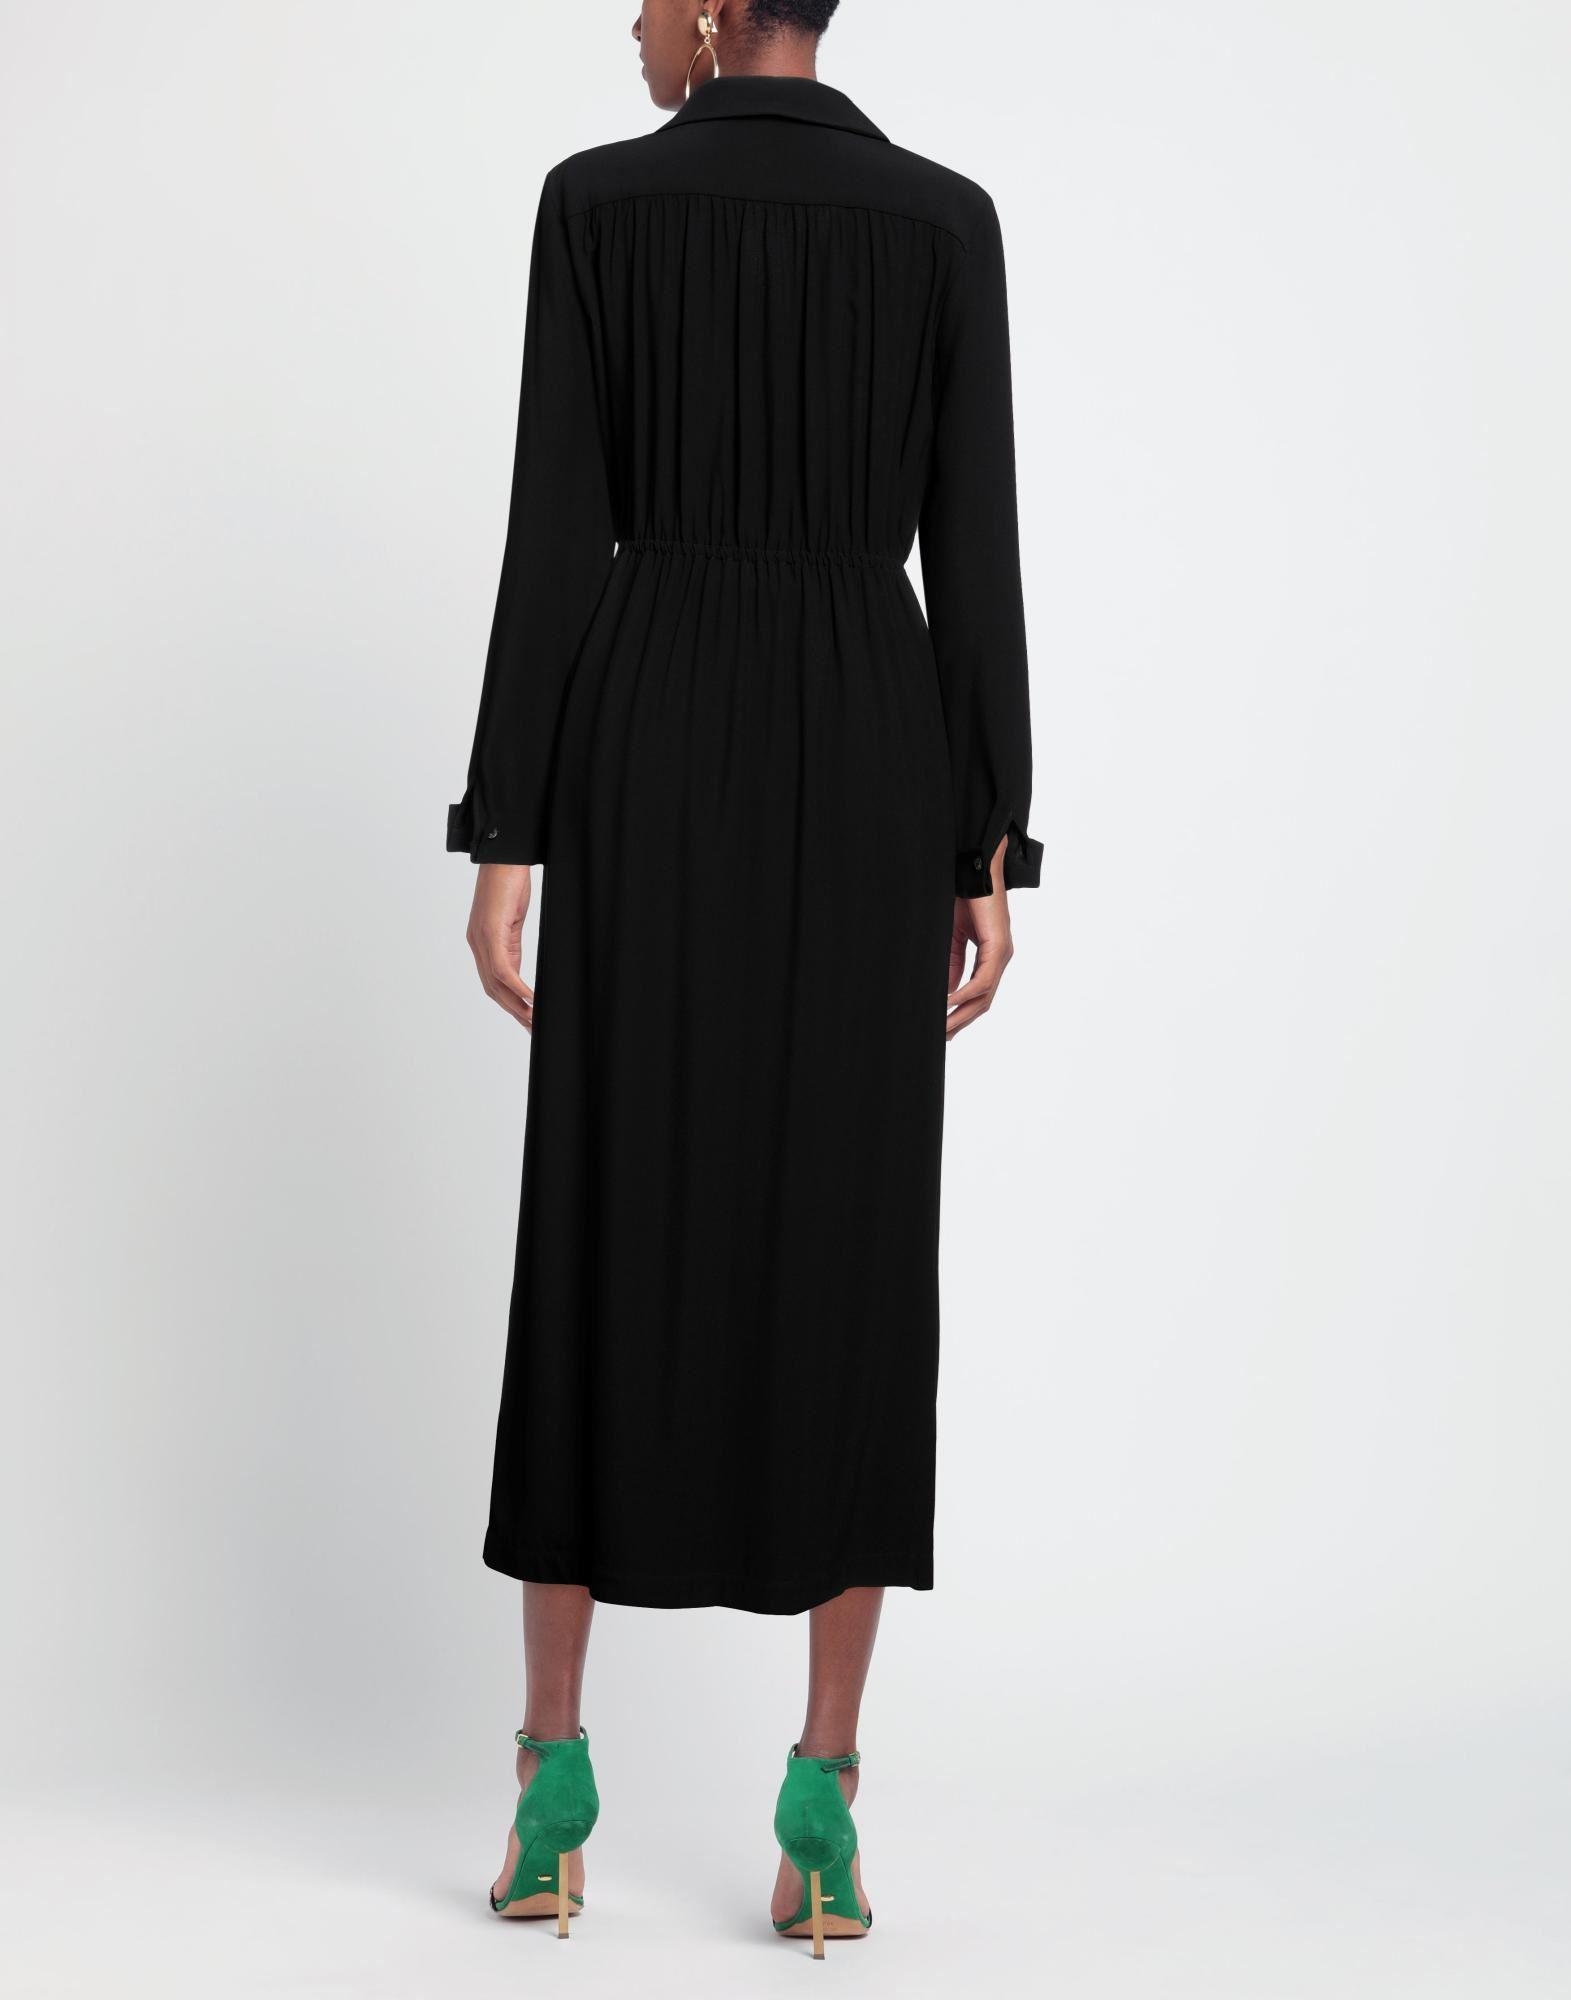 Liviana Conti Midi Dress in Black | Lyst